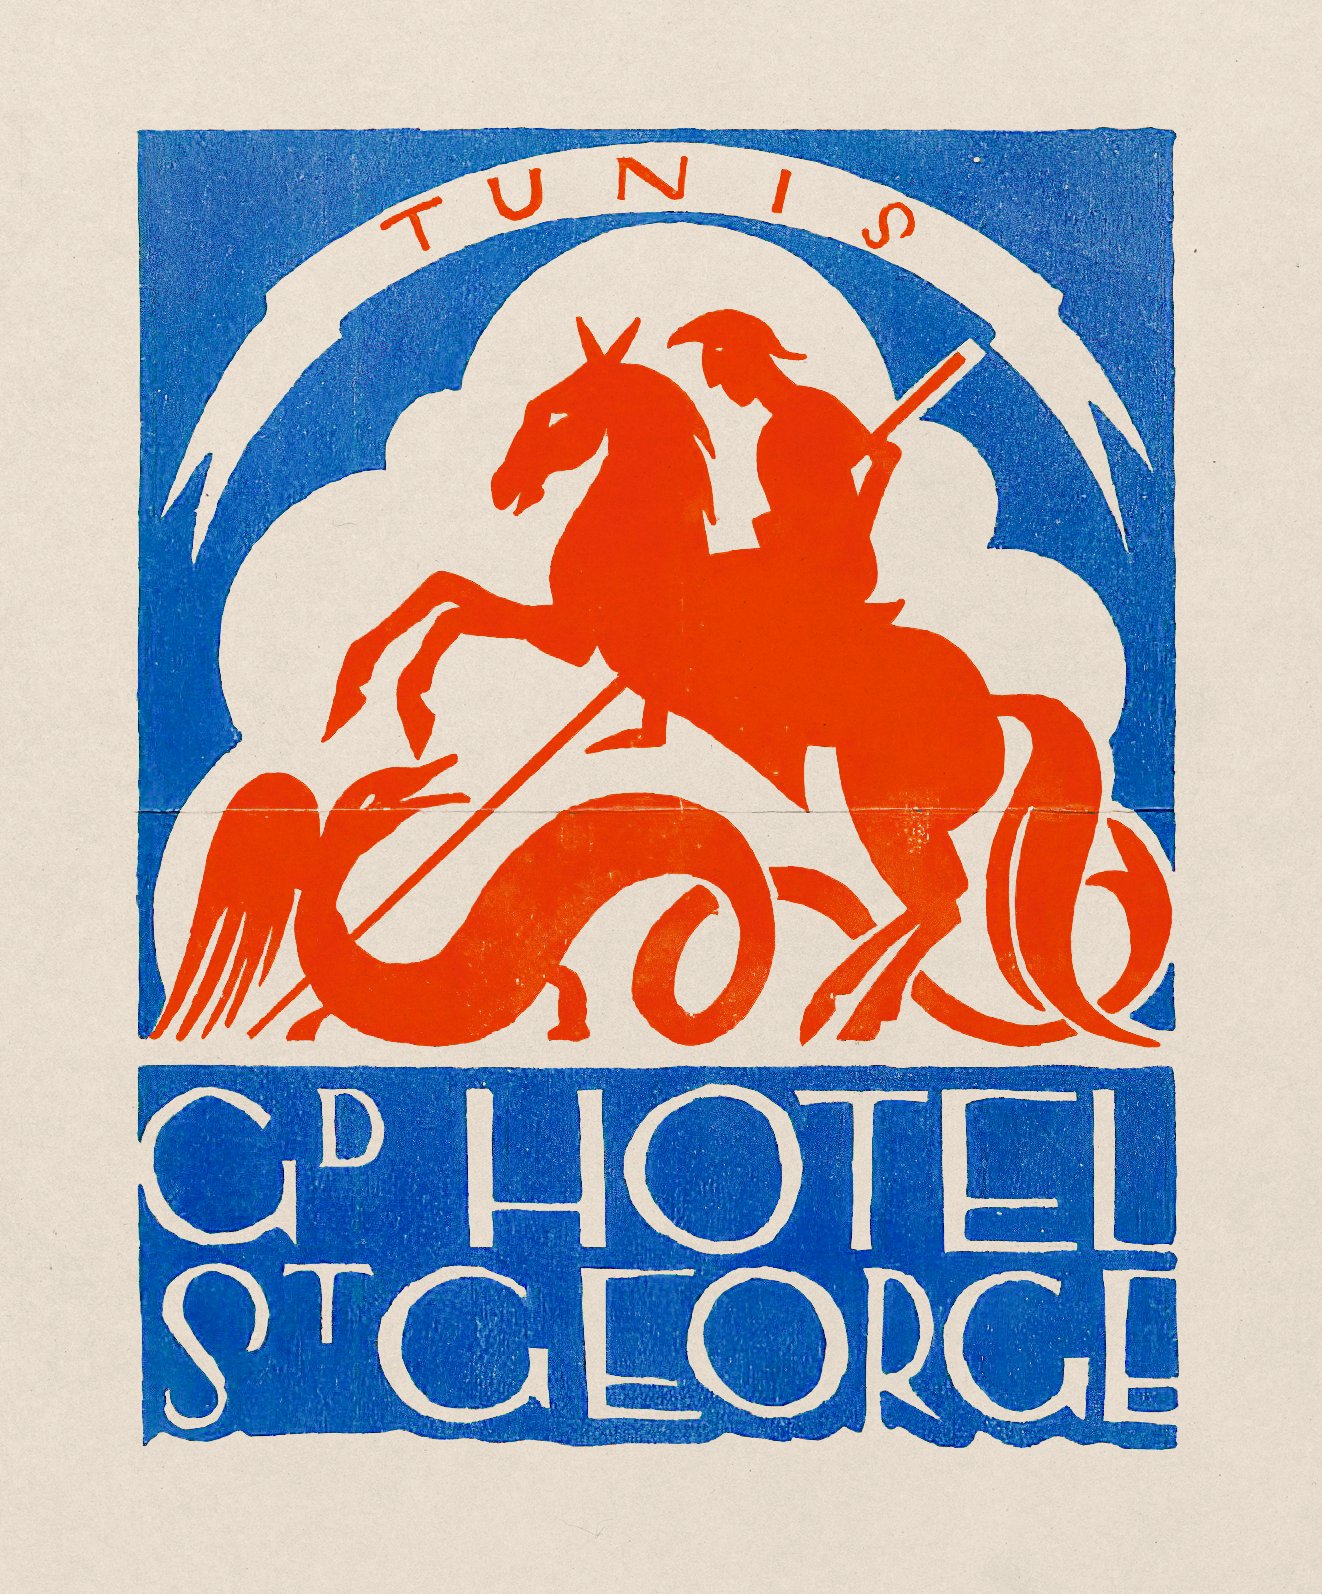 Hotel St. George